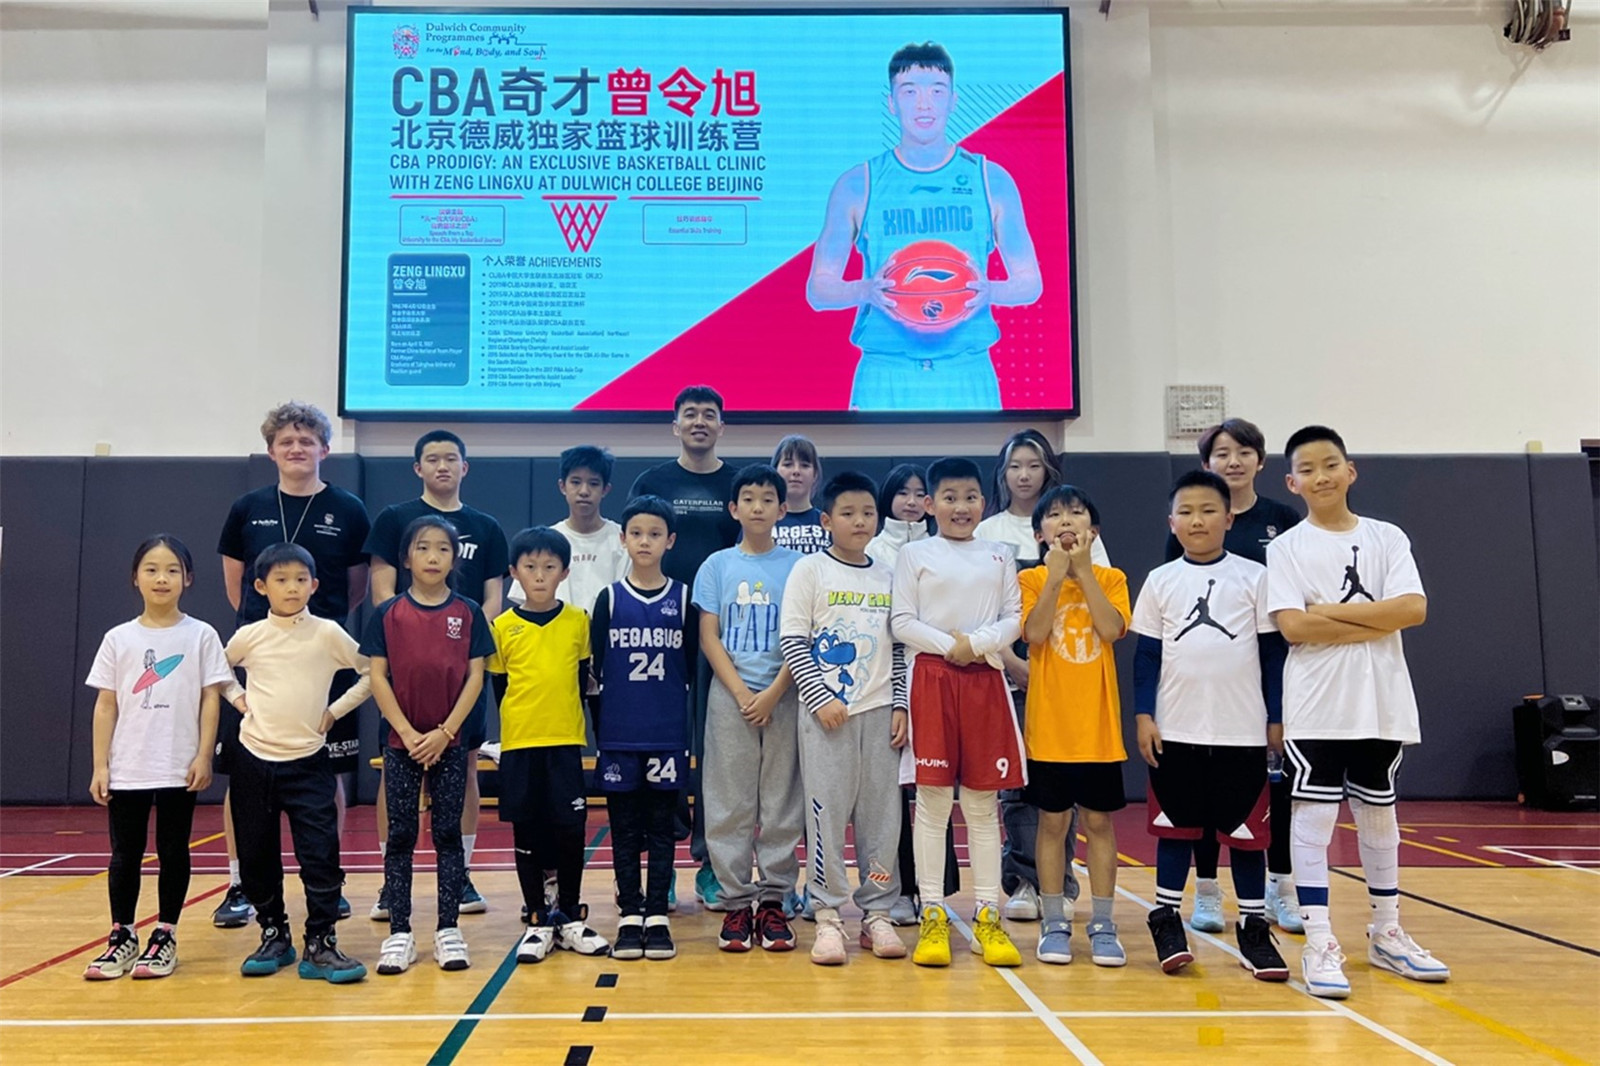 CBA Prodigy Basketball Exclusive Clinic with Zeng Lingxu